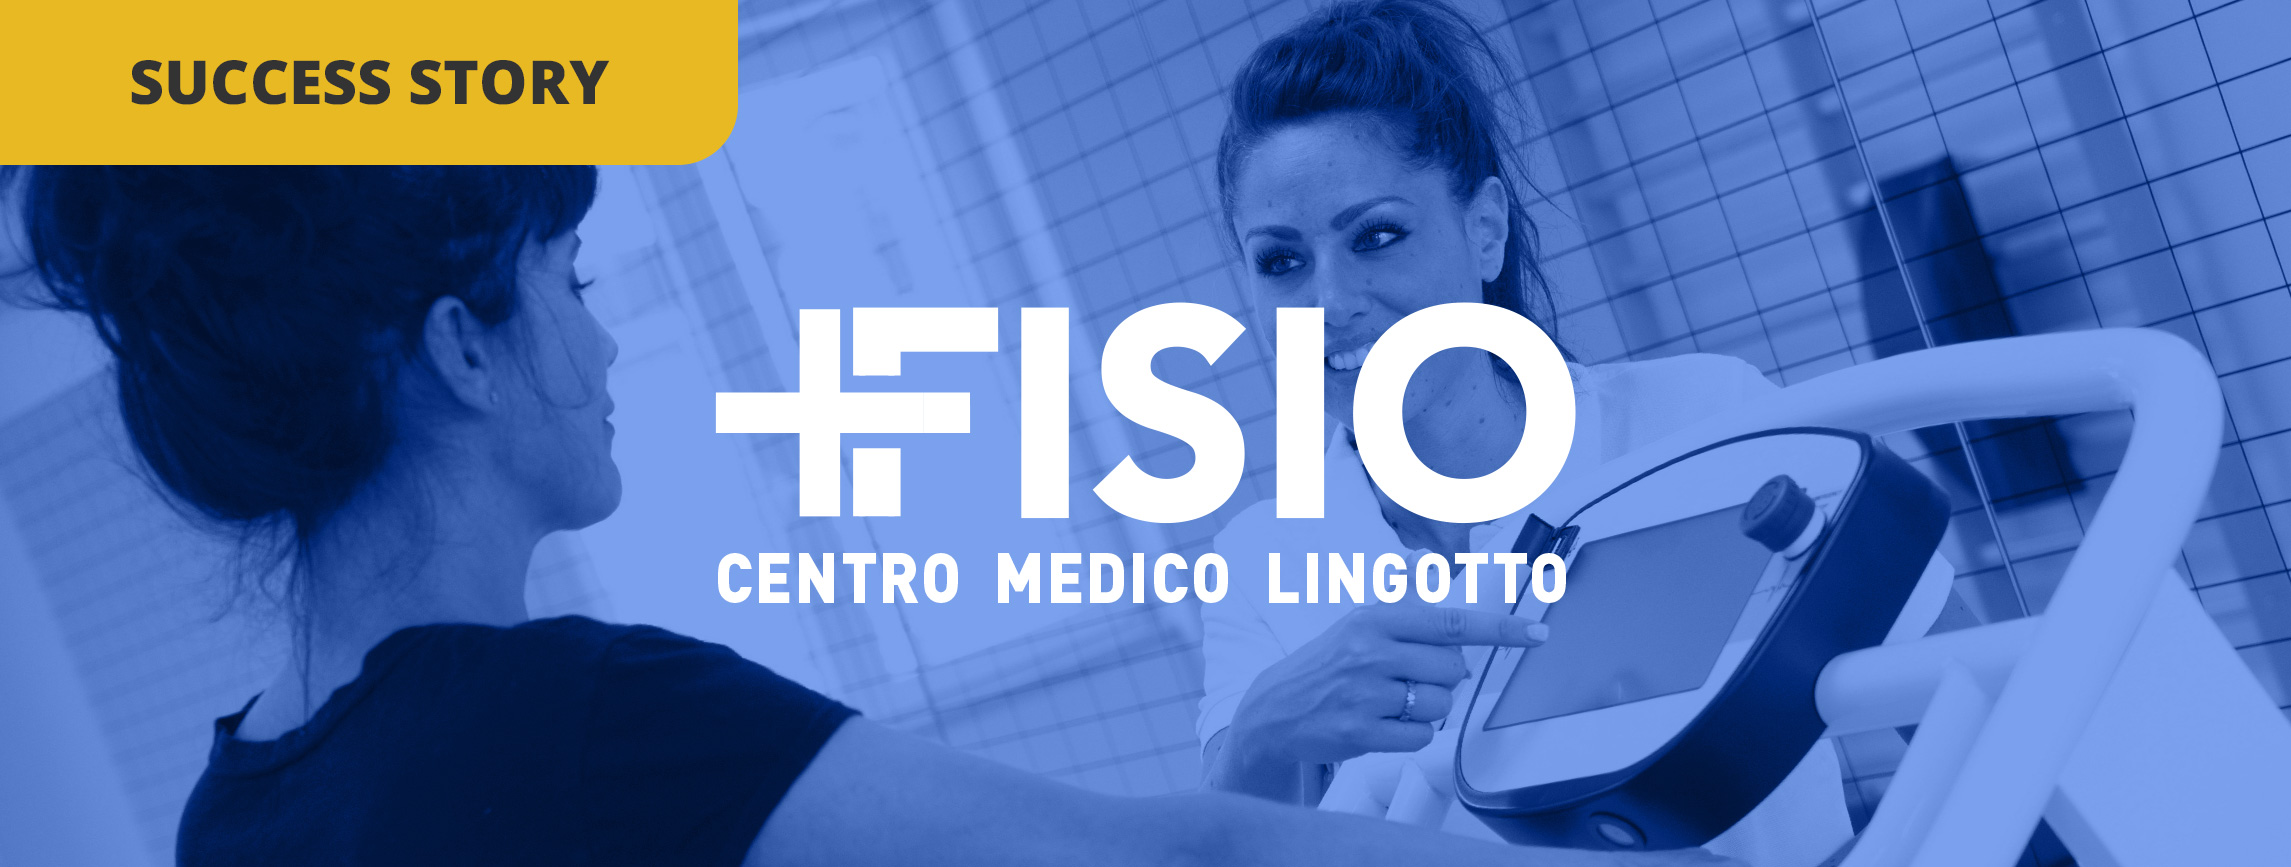 Centro Medico Fisio Lingotto Success Story